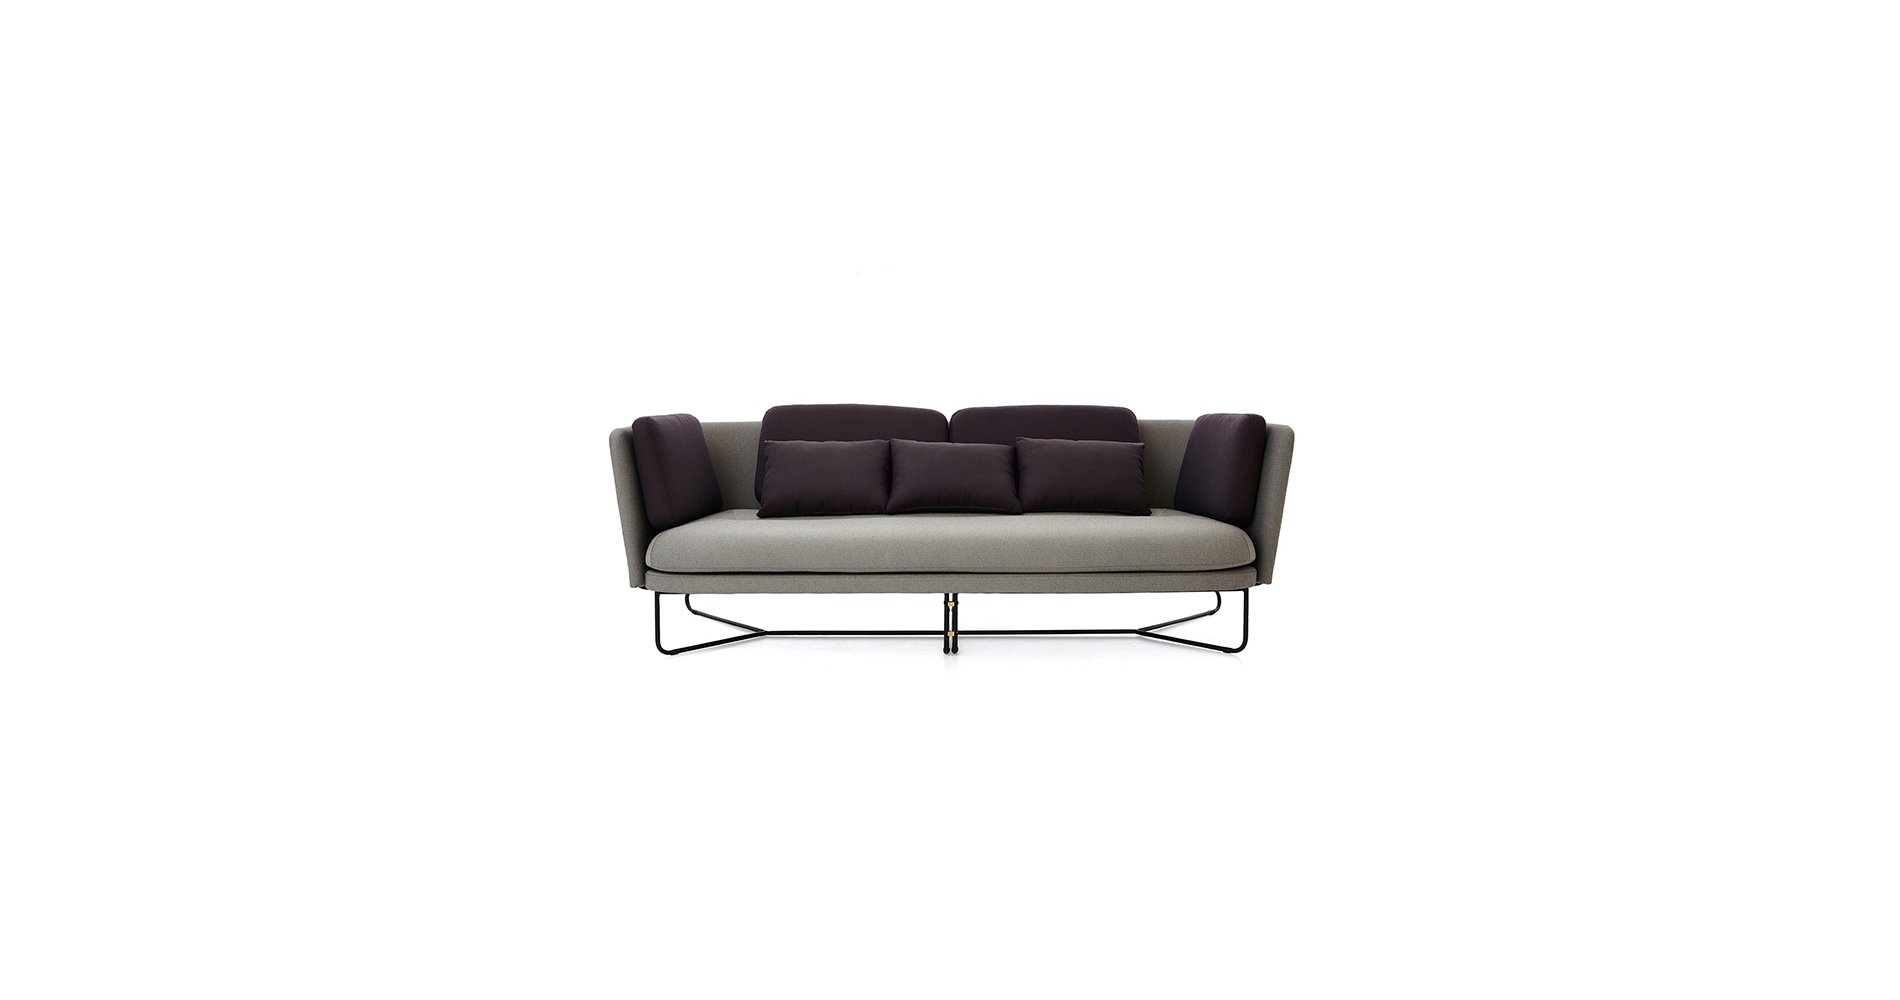 An image of Chillax Sofa